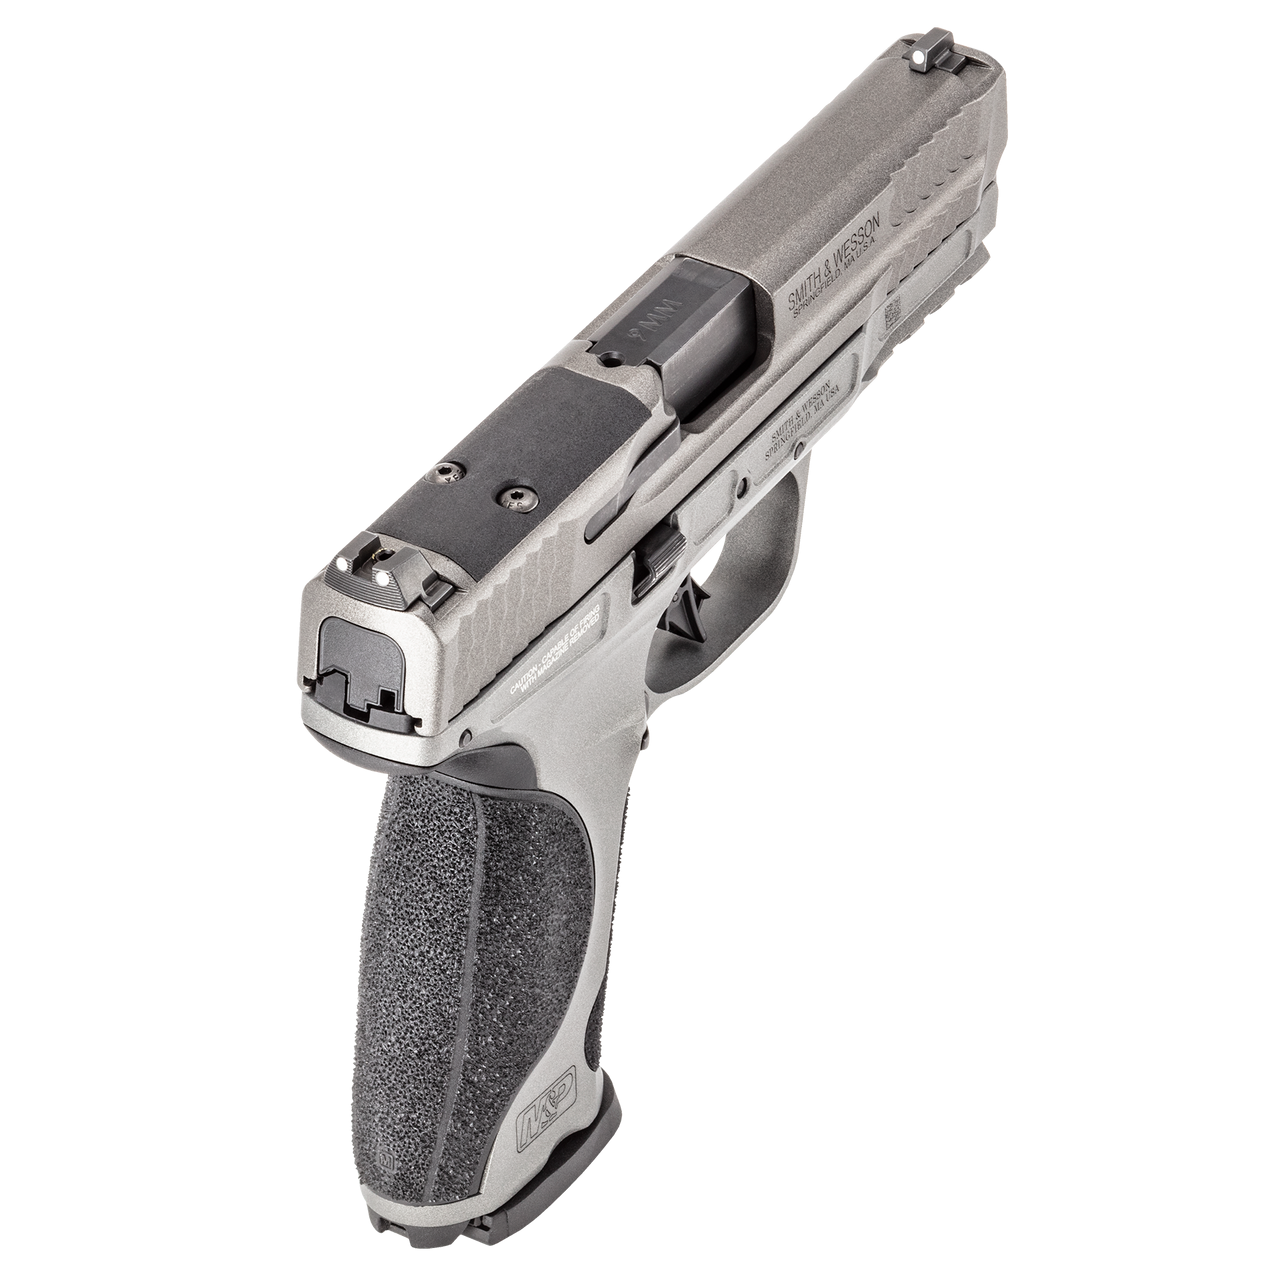 Pistola SMITH & WESSON M&P9 M2.0 Metal 4.25